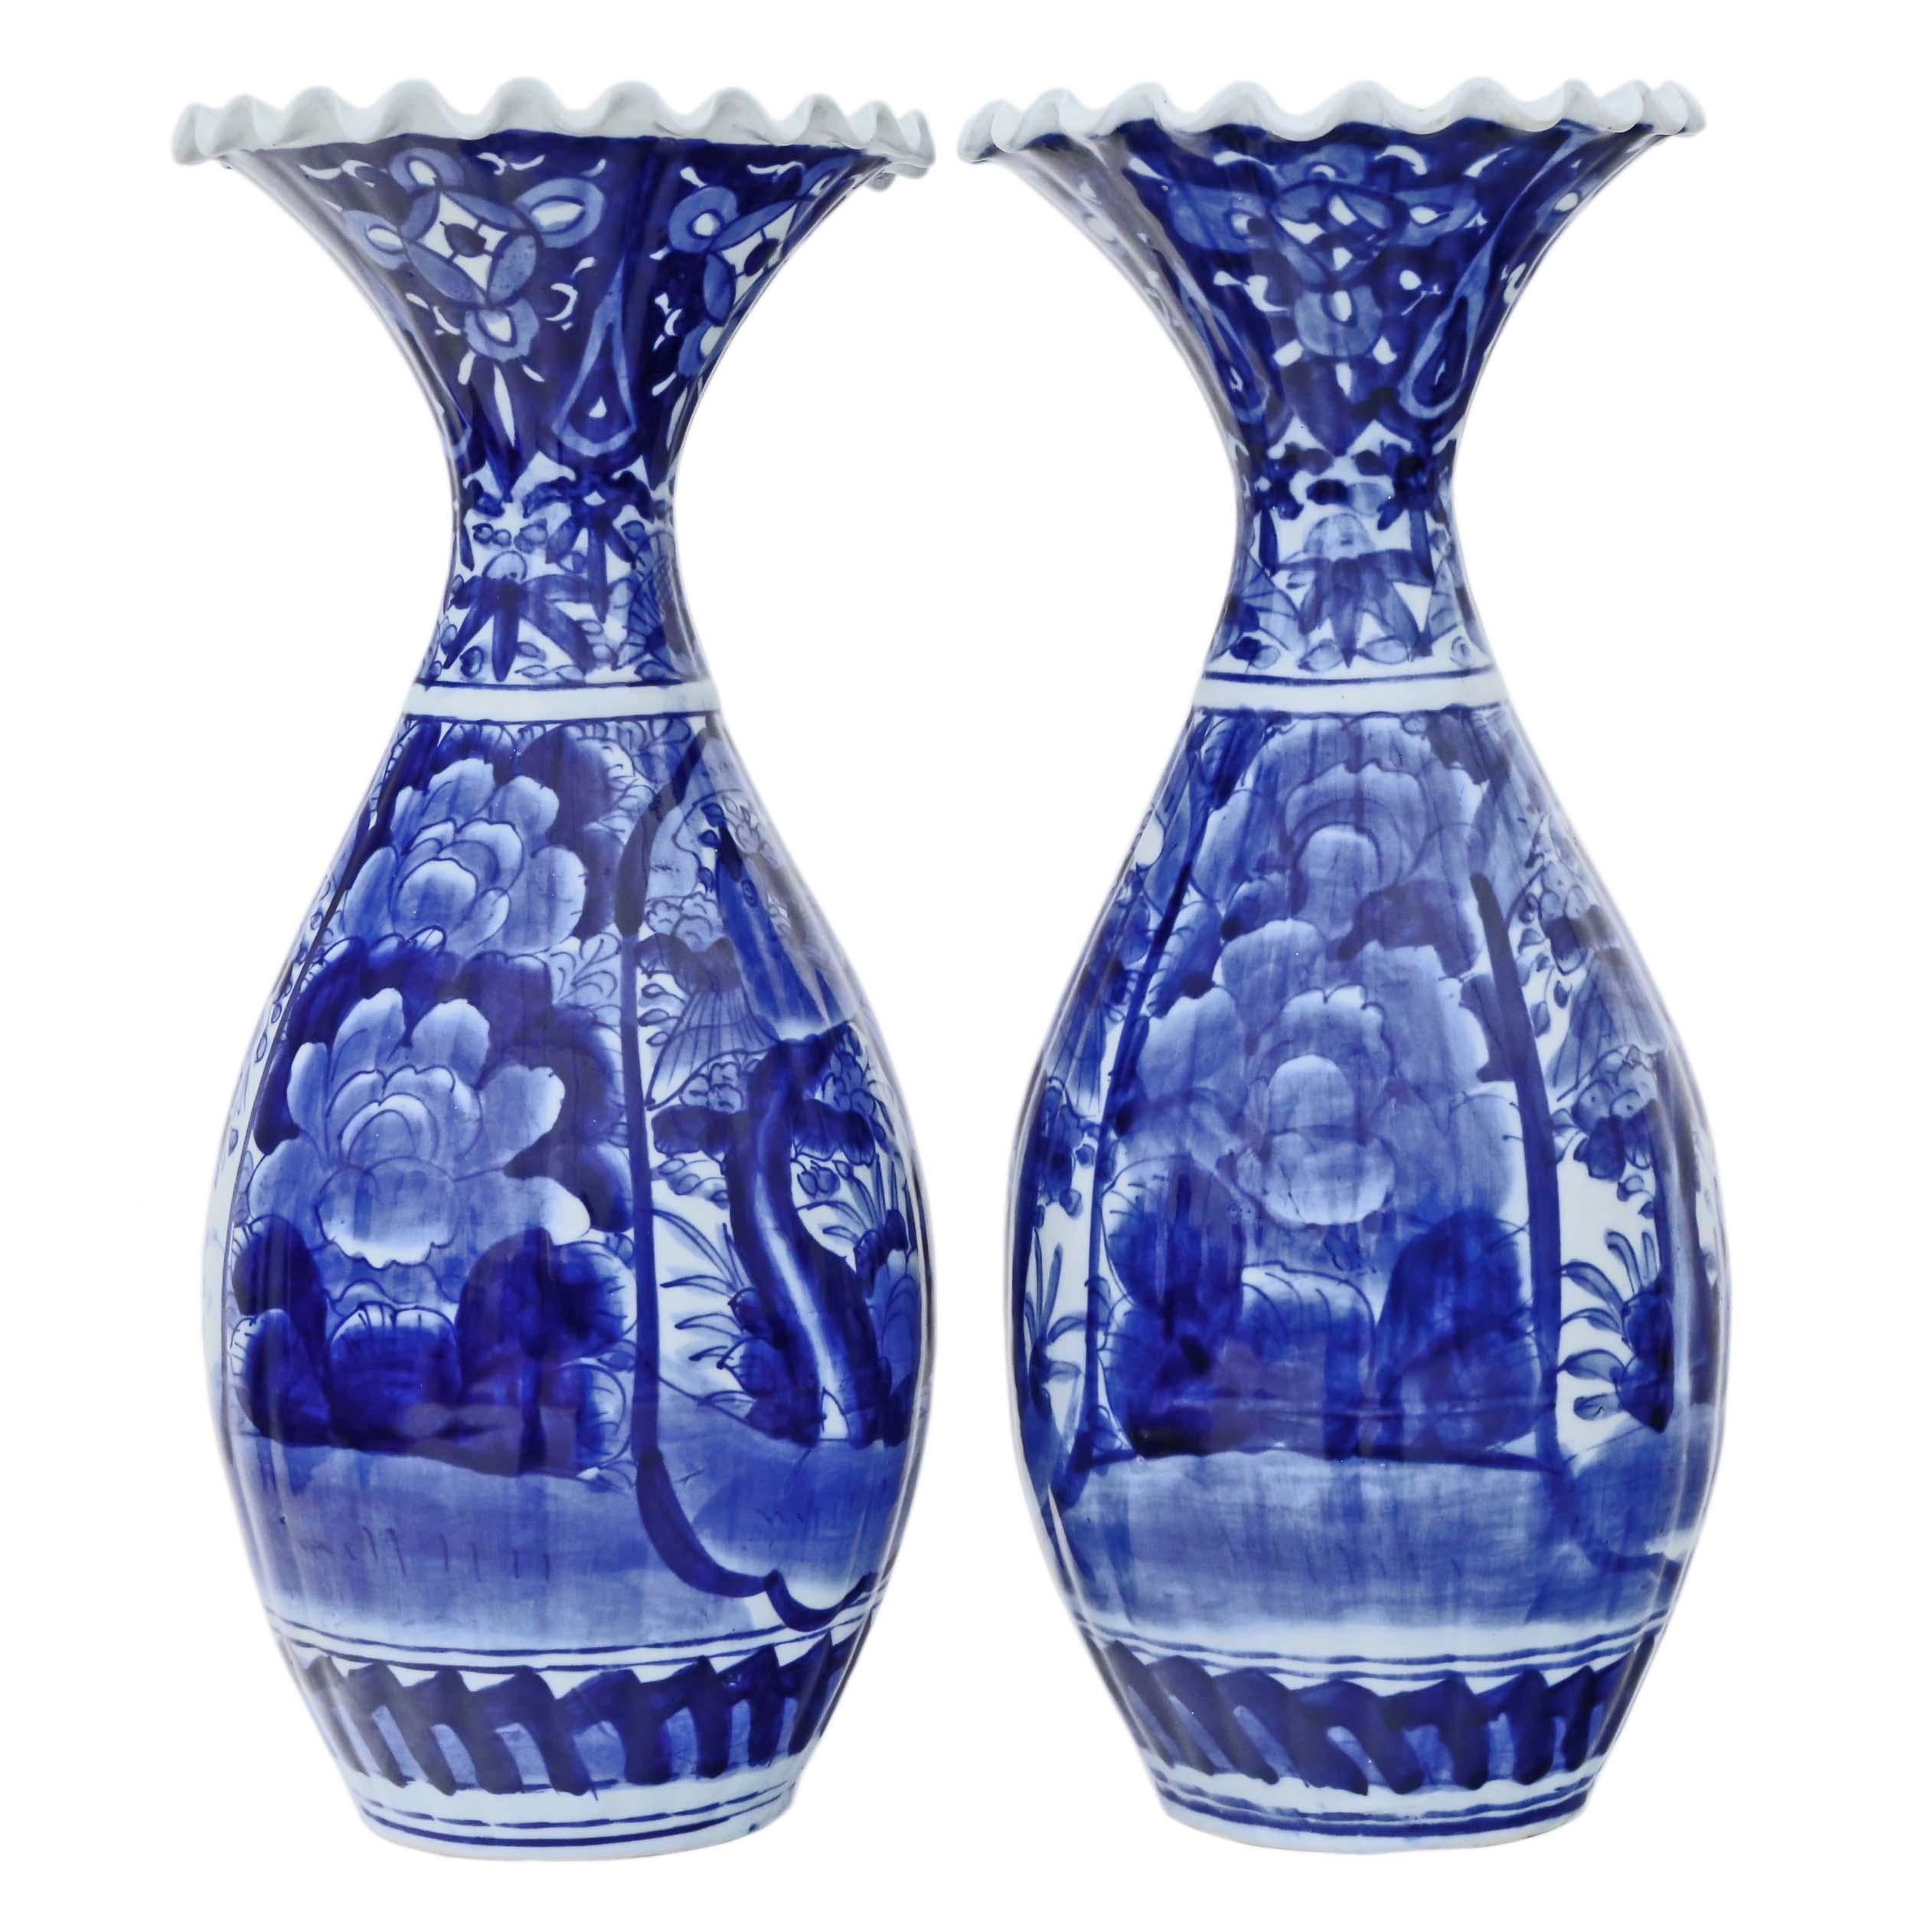 Early 20th Century Large Pair of Japanese Meiji Imari Blue and White Vases